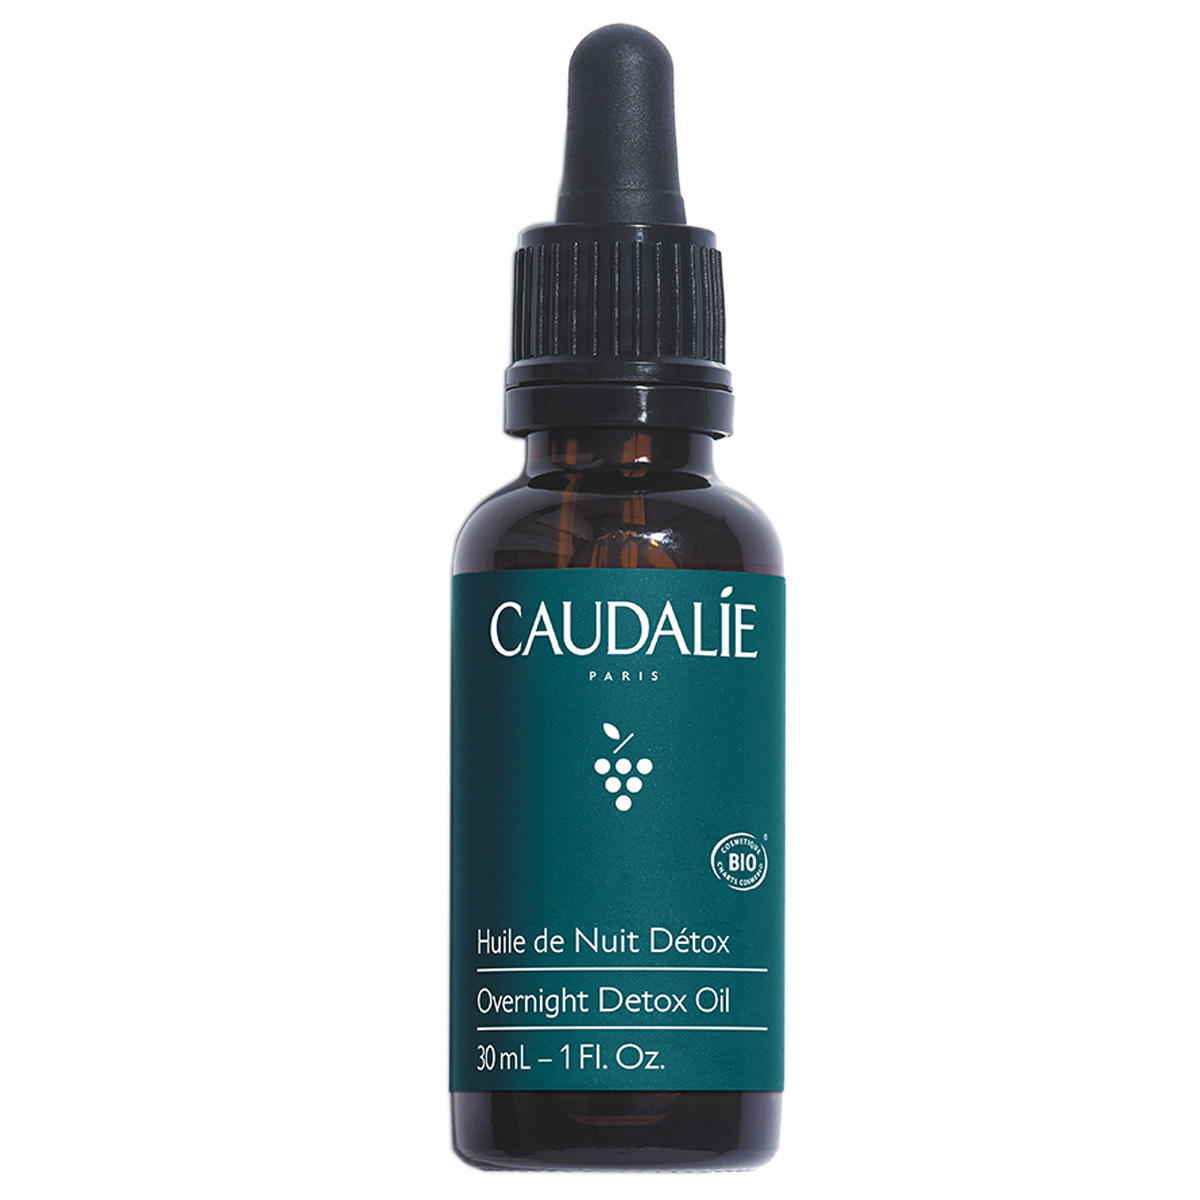 CAUDALIE Overnight Detox Oil 30 ml - 1